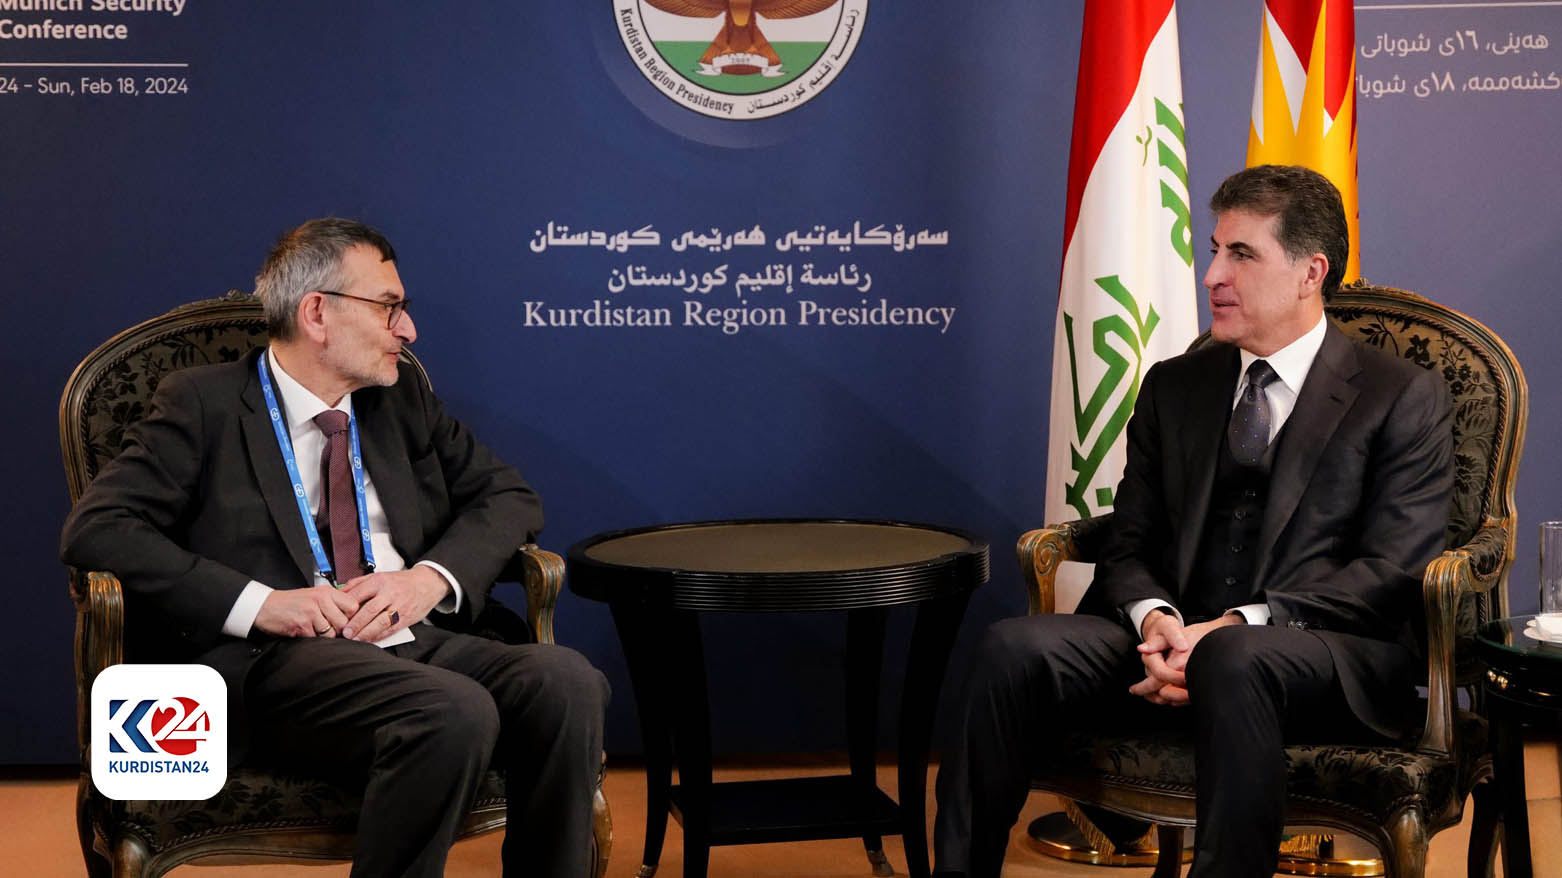 President Barzani thanks UN for their positive role in Kurdistan Region